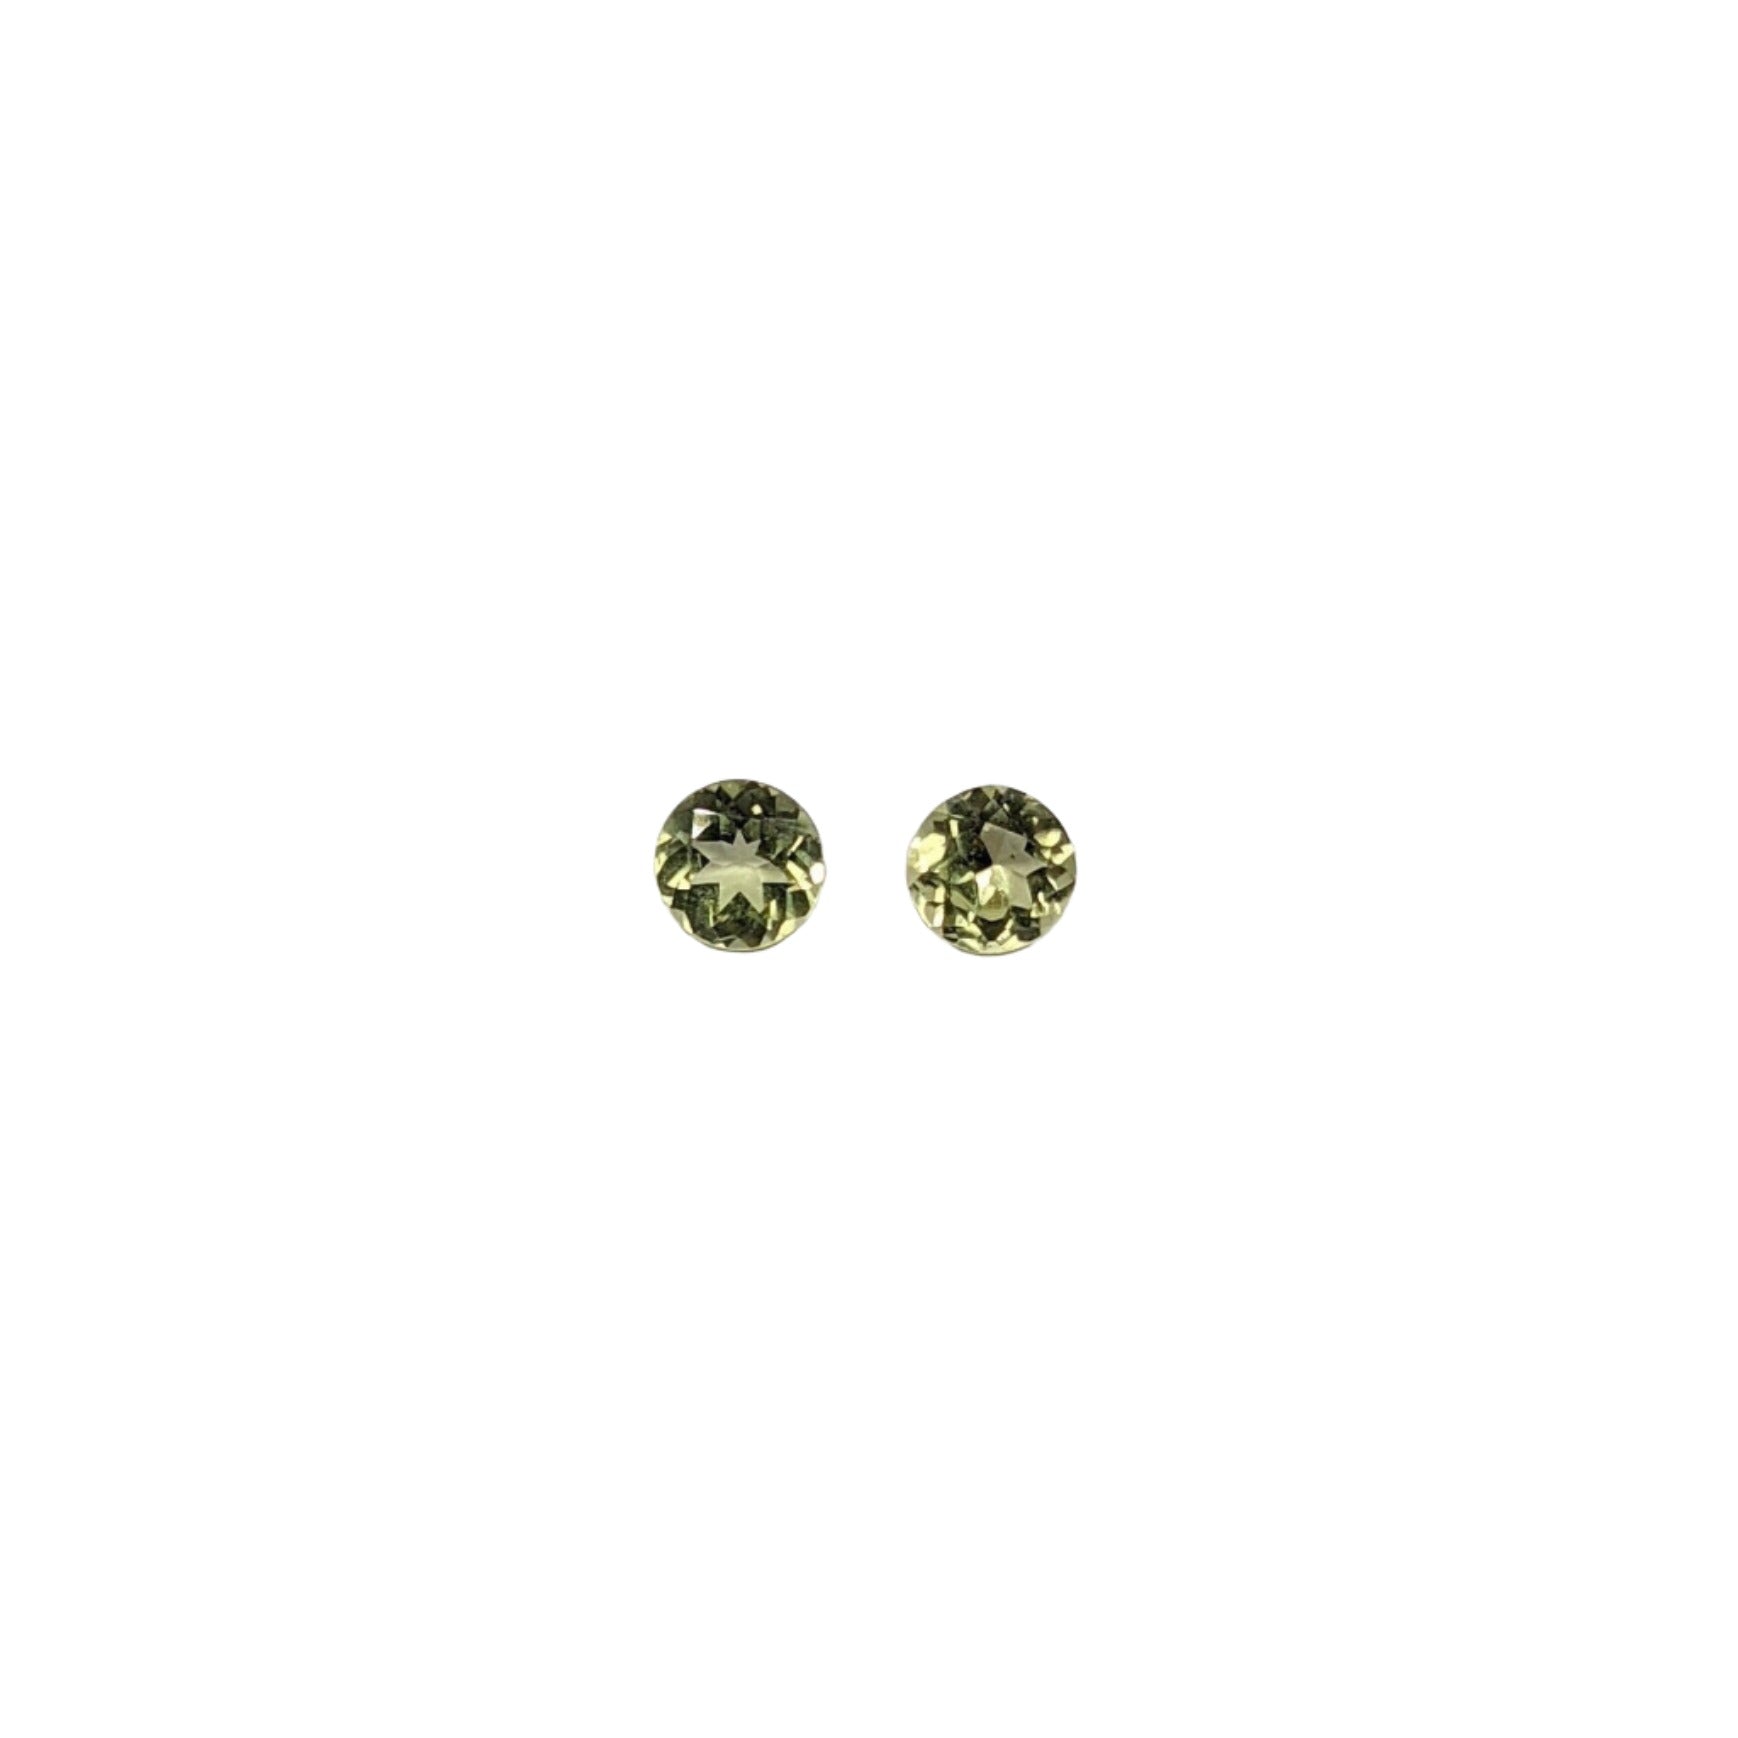 Natural Arizonian Peridot | Round Shape | 3.5mm 4mm| Gemstone | August Birthstone |Jewelry Center Stone | Certified